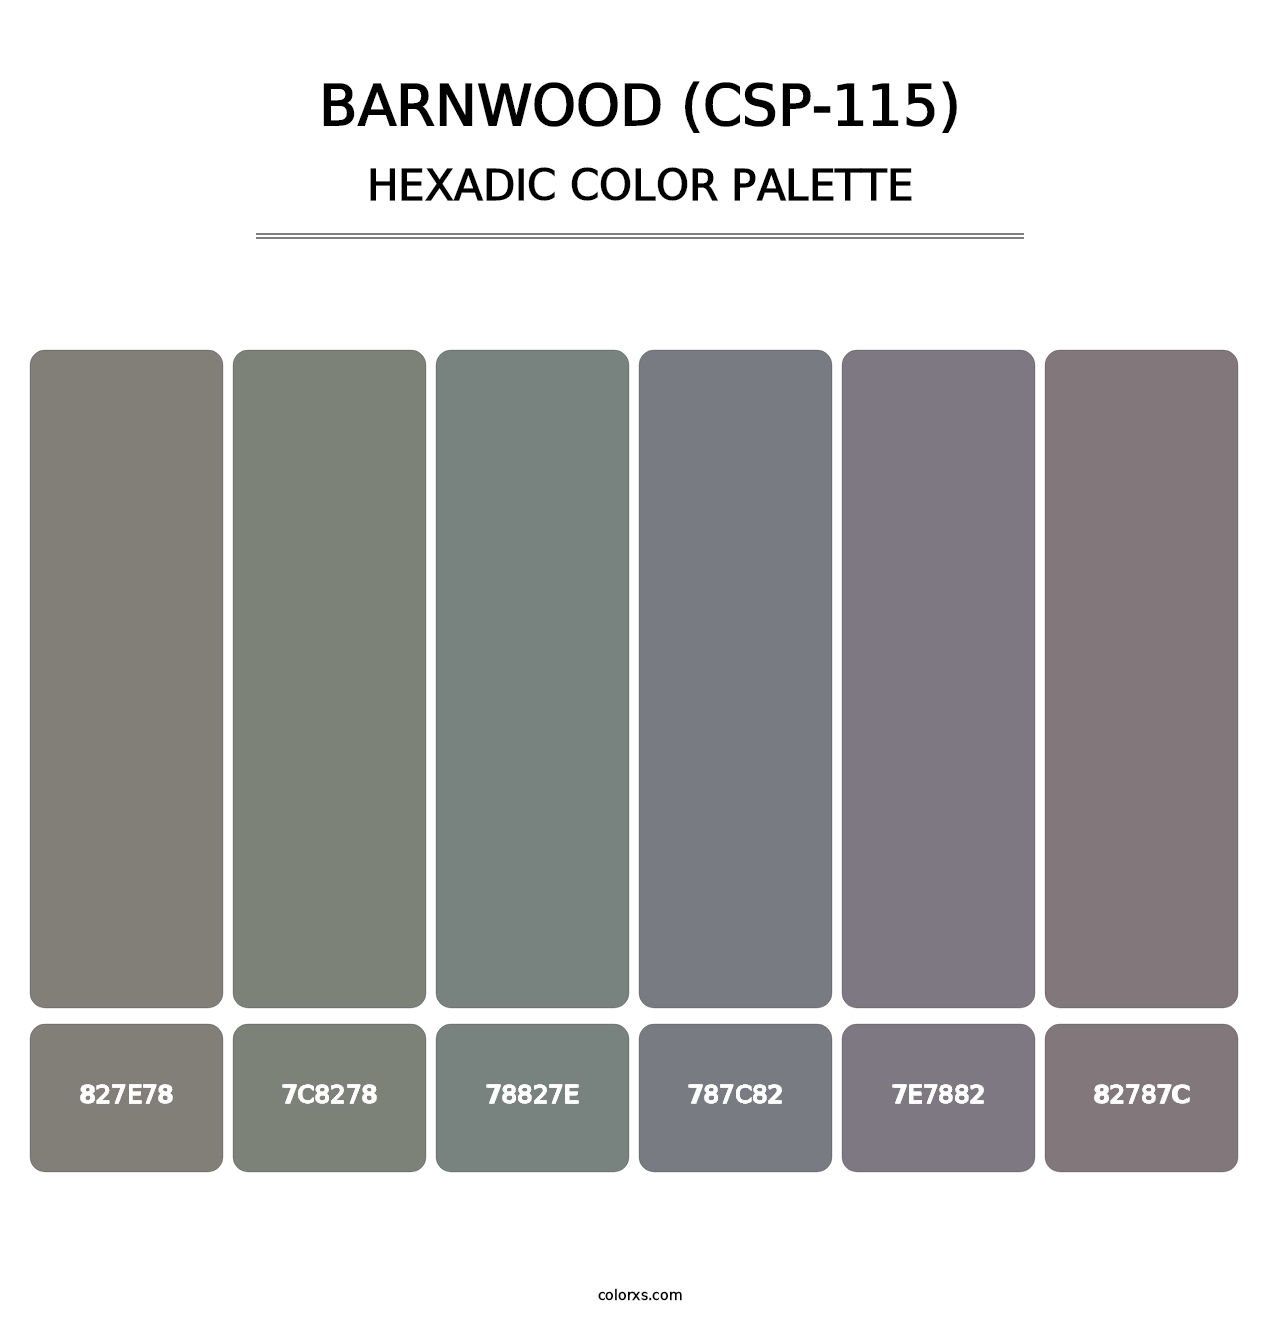 Barnwood (CSP-115) - Hexadic Color Palette